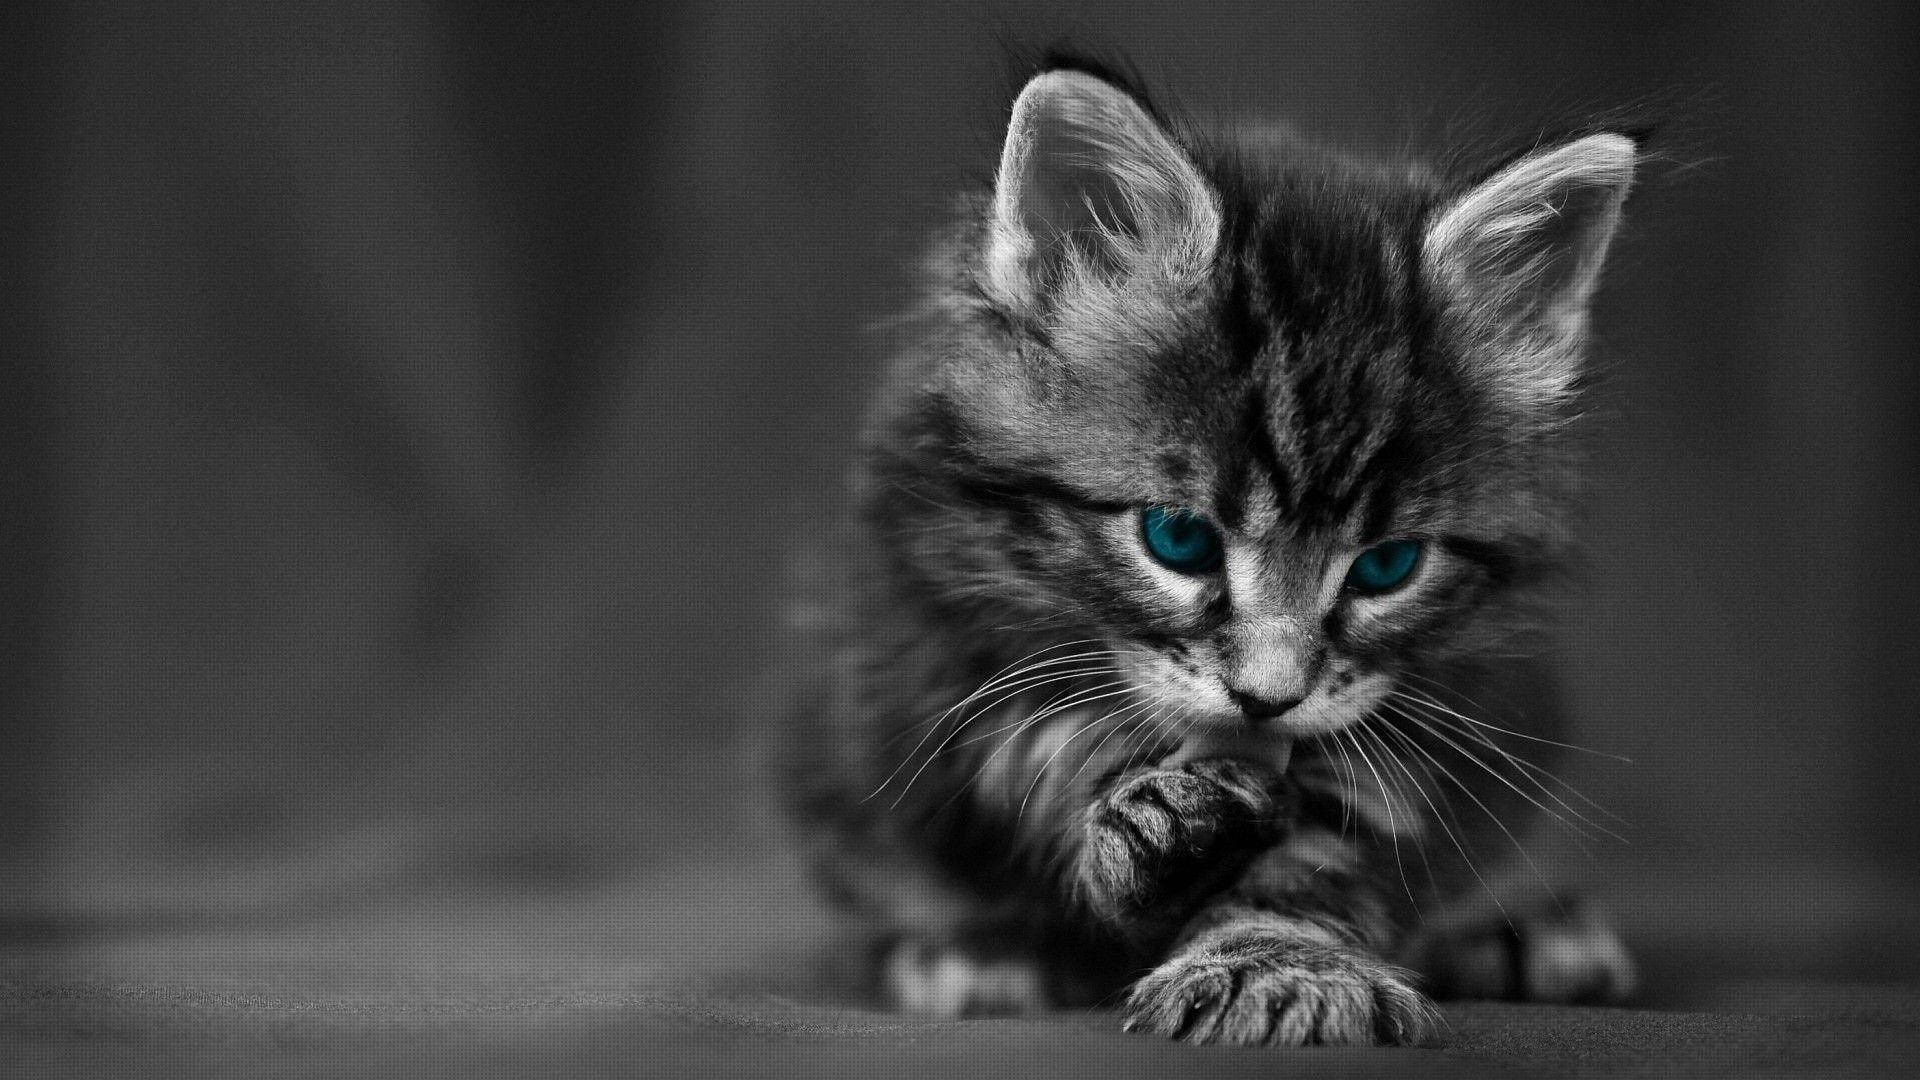 Dark Girly Cat With Blue Eyes Background